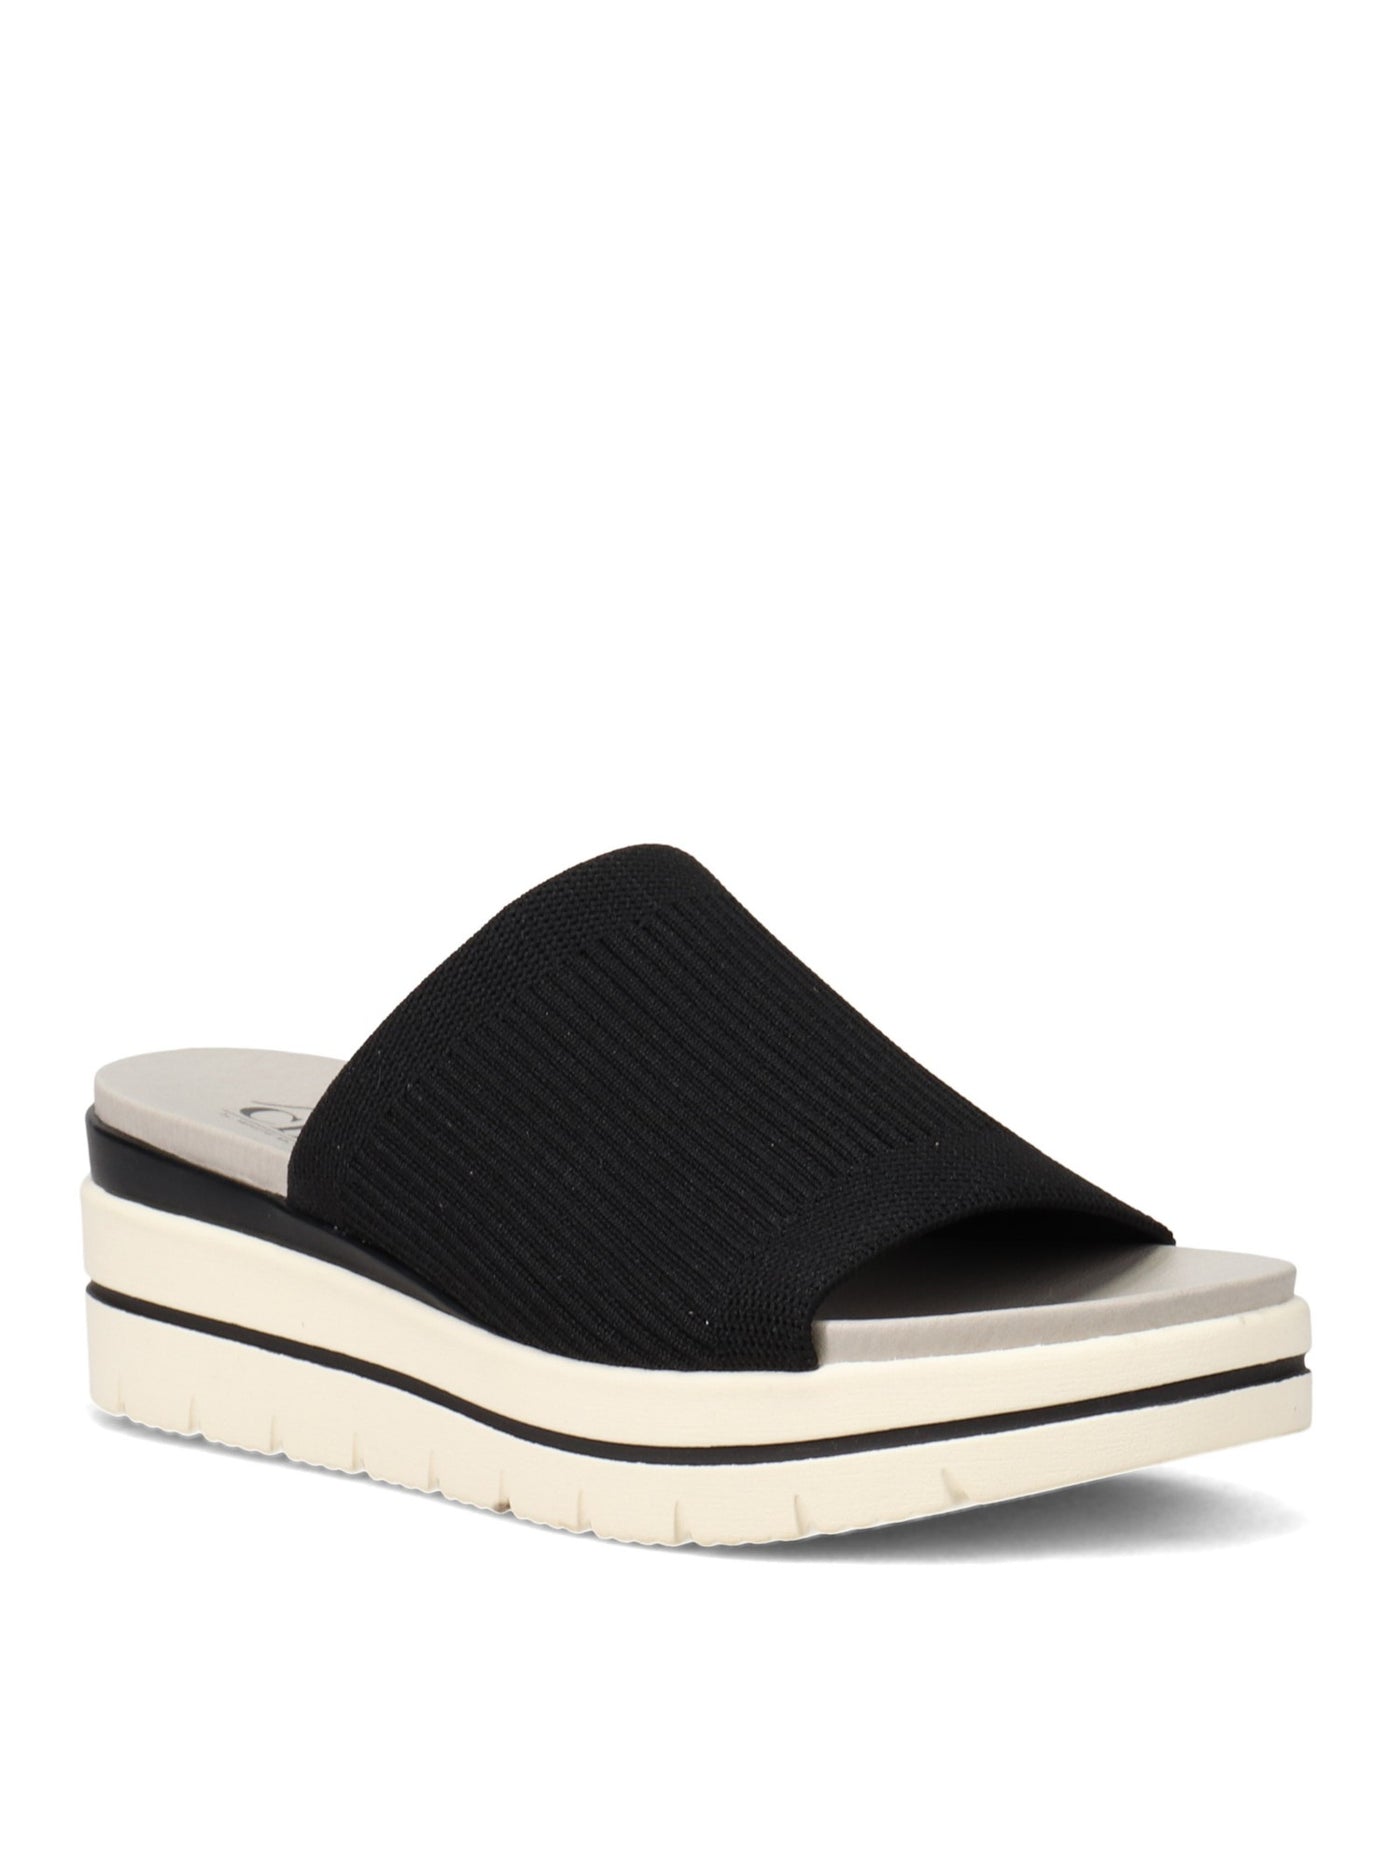 CLIFFS BY WHITE MOUNTAIN Womens Black 1" Platform Comfort Typhoon Round Toe Wedge Slip On Slide Sandals Shoes 7.5 M